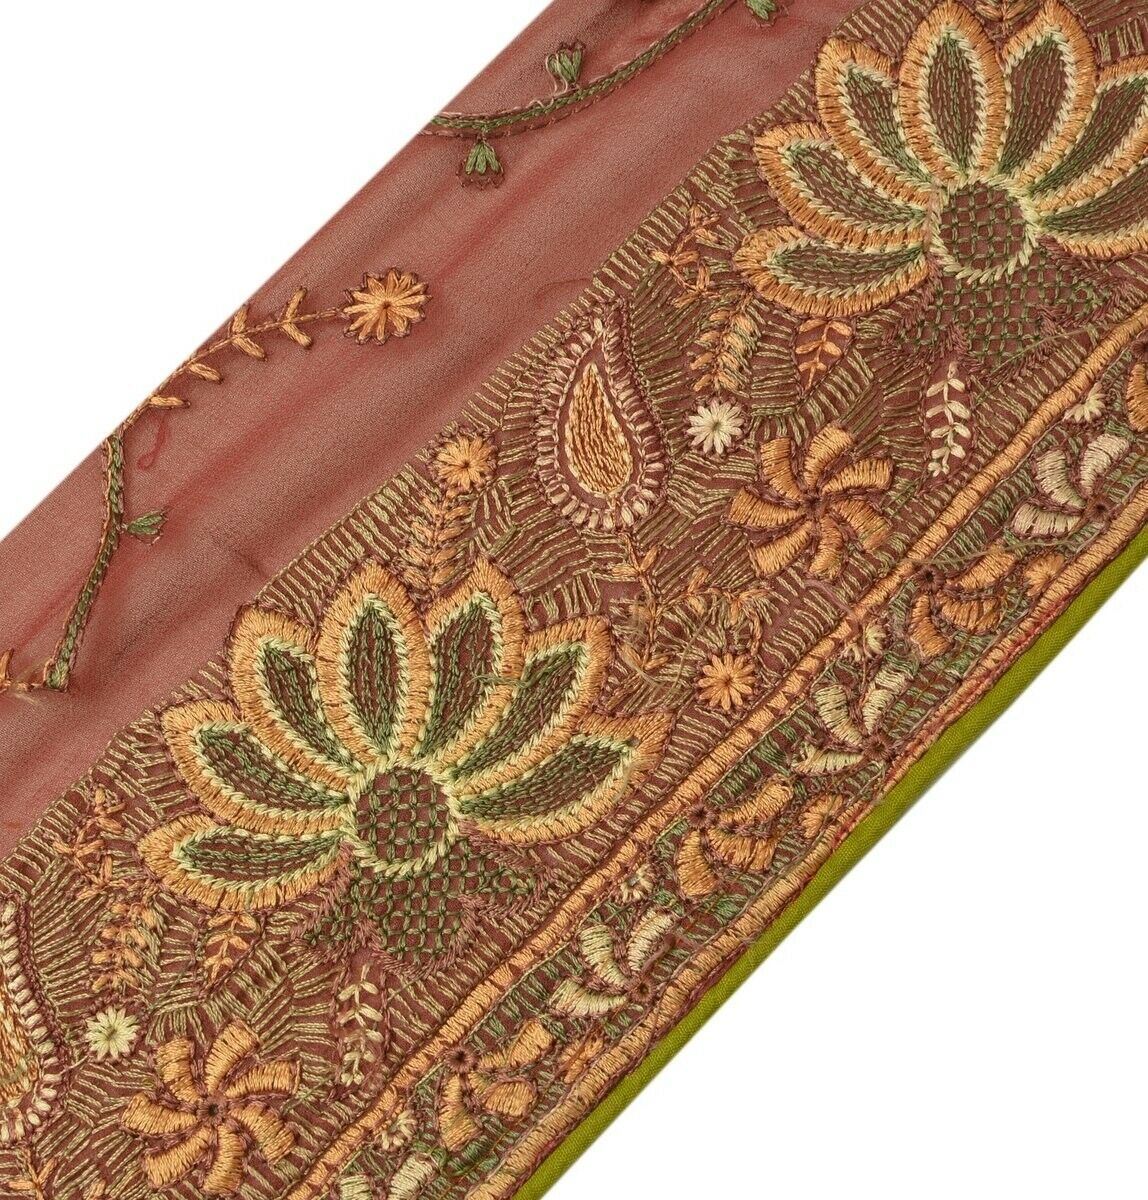 Vintage Sari Border Indian Craft Trim Embroidered Floral Maroon Ribbon Lace